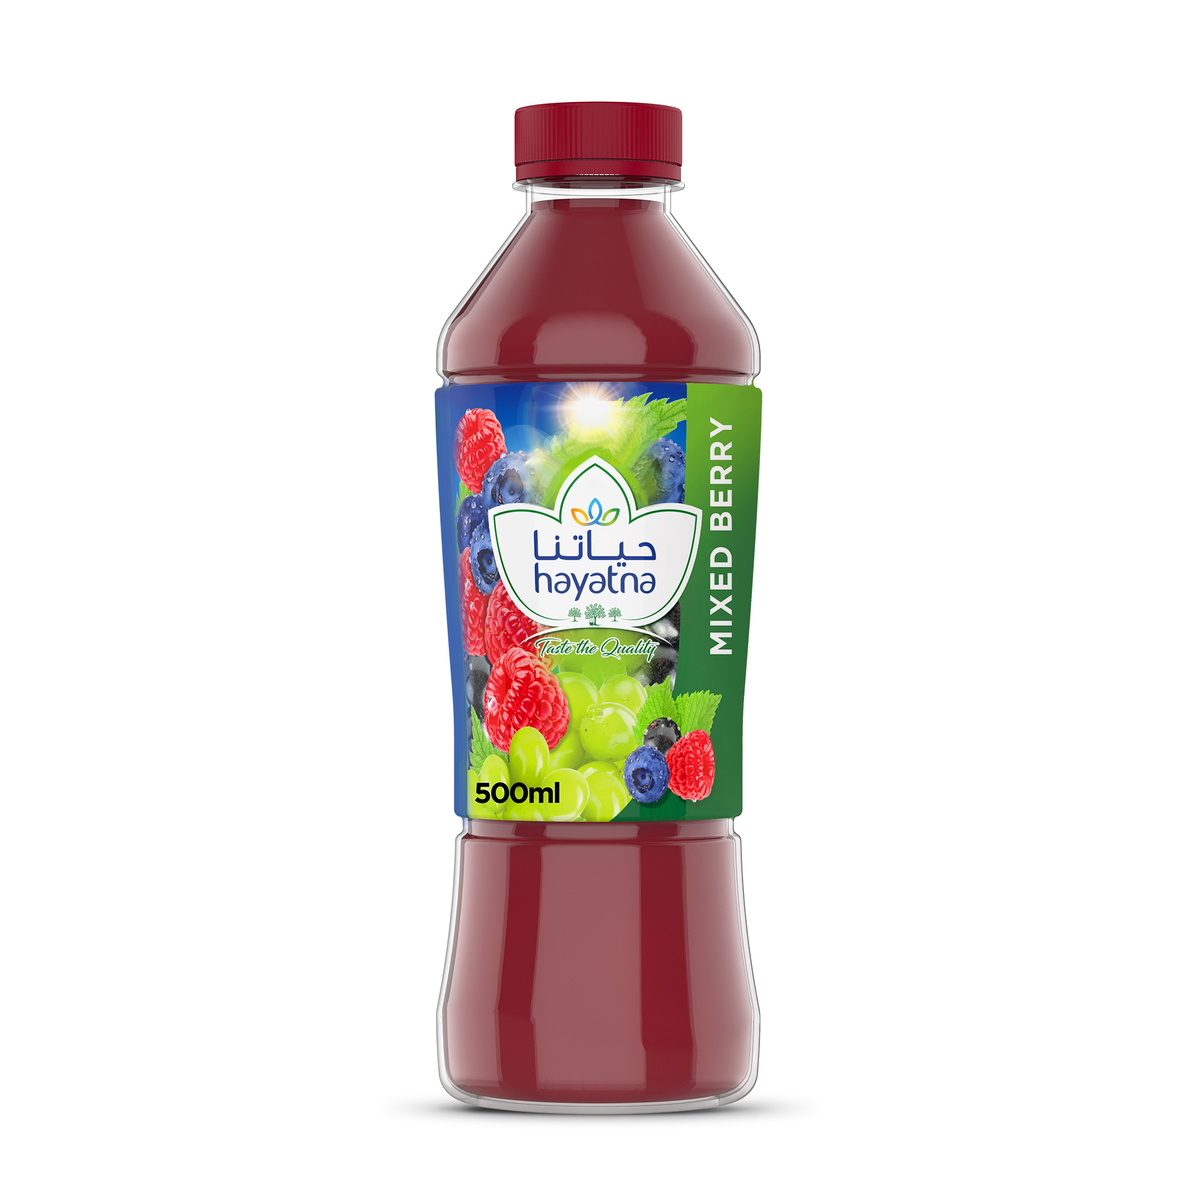 Hayatna No Added Sugar, 100% Pure Mixed Berry Juice, 500 ml